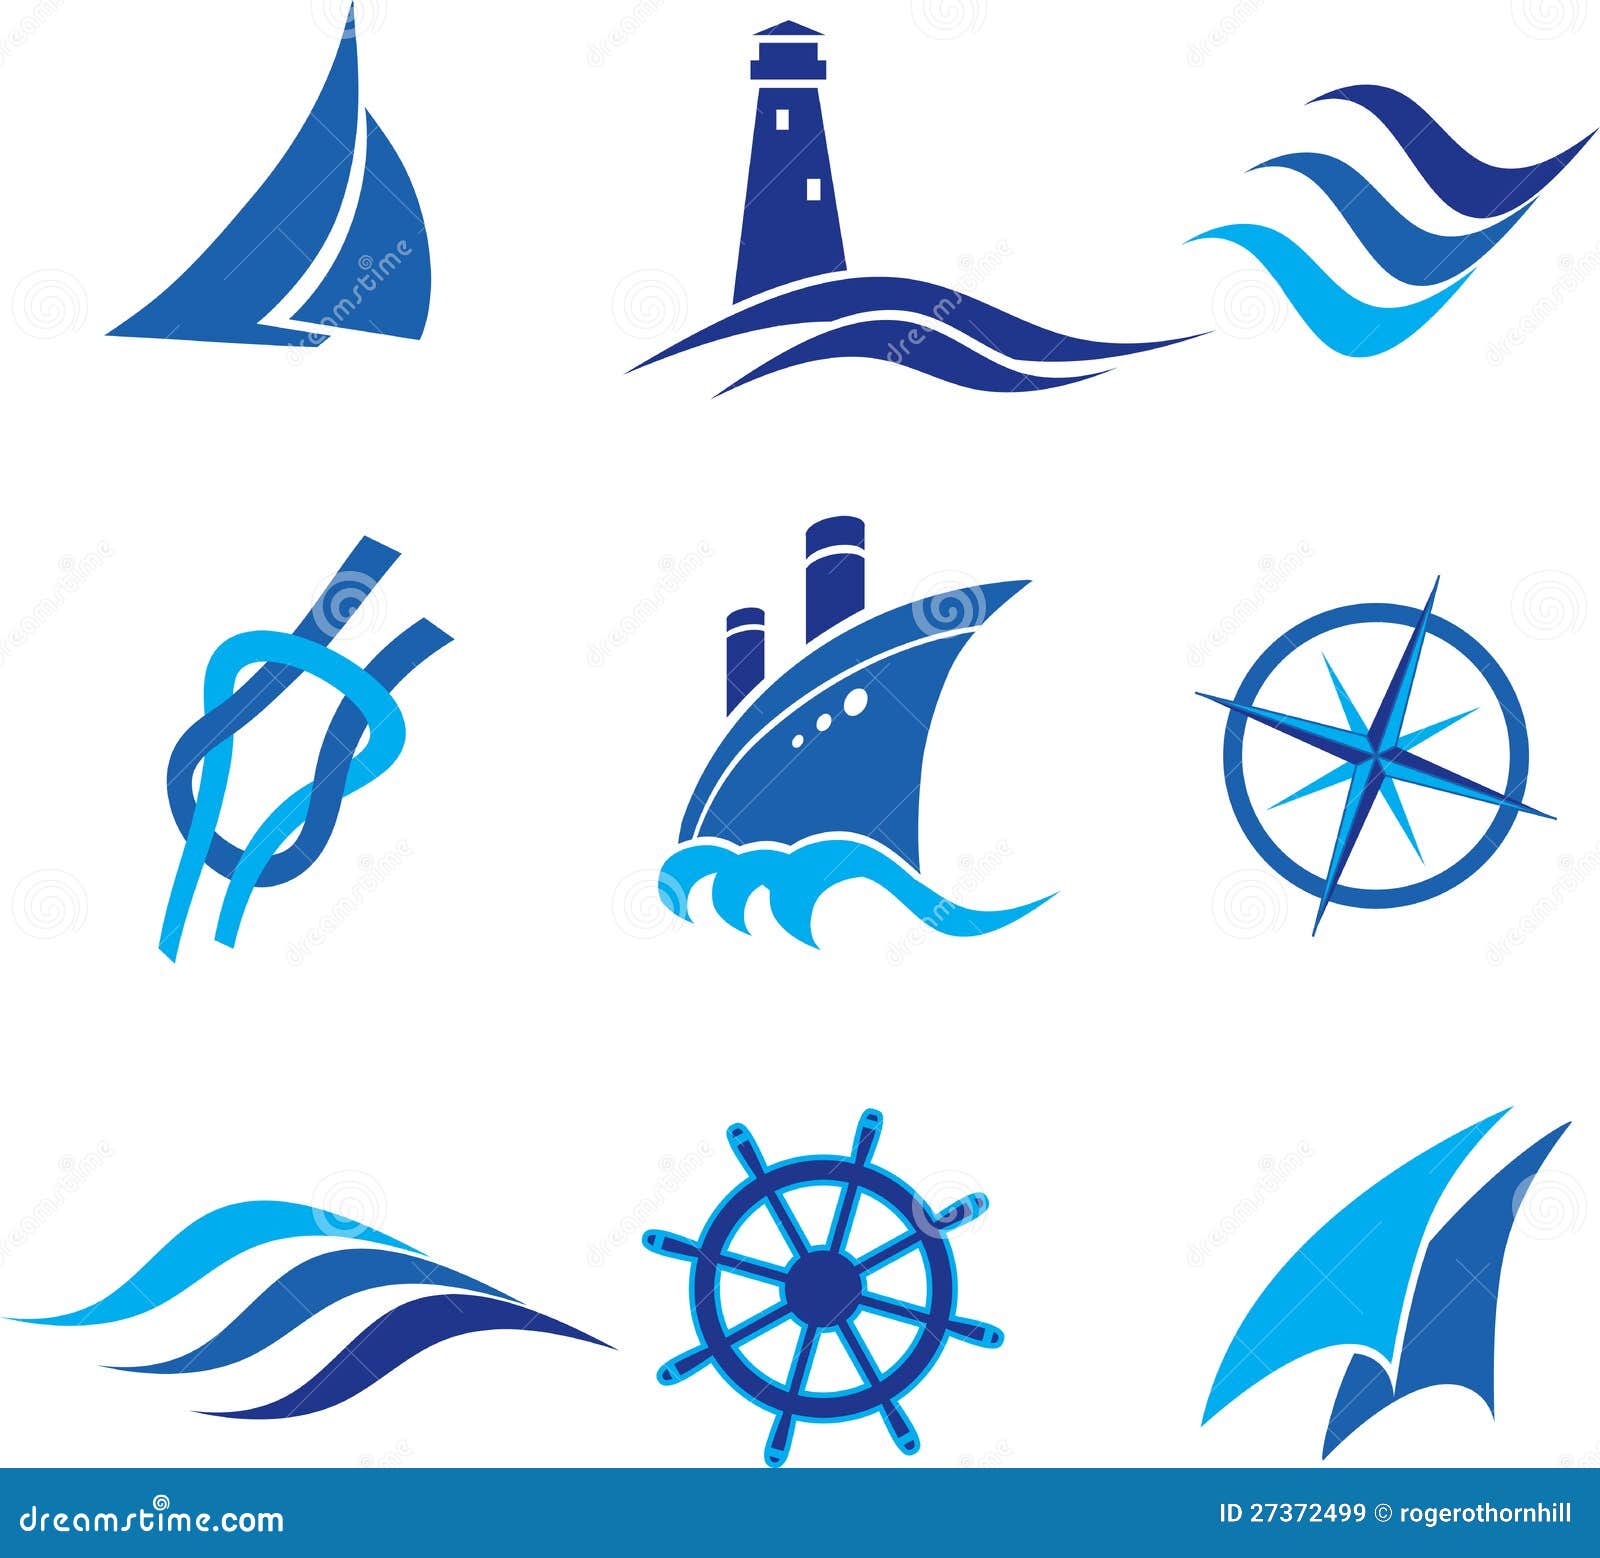 nautical logos and icons